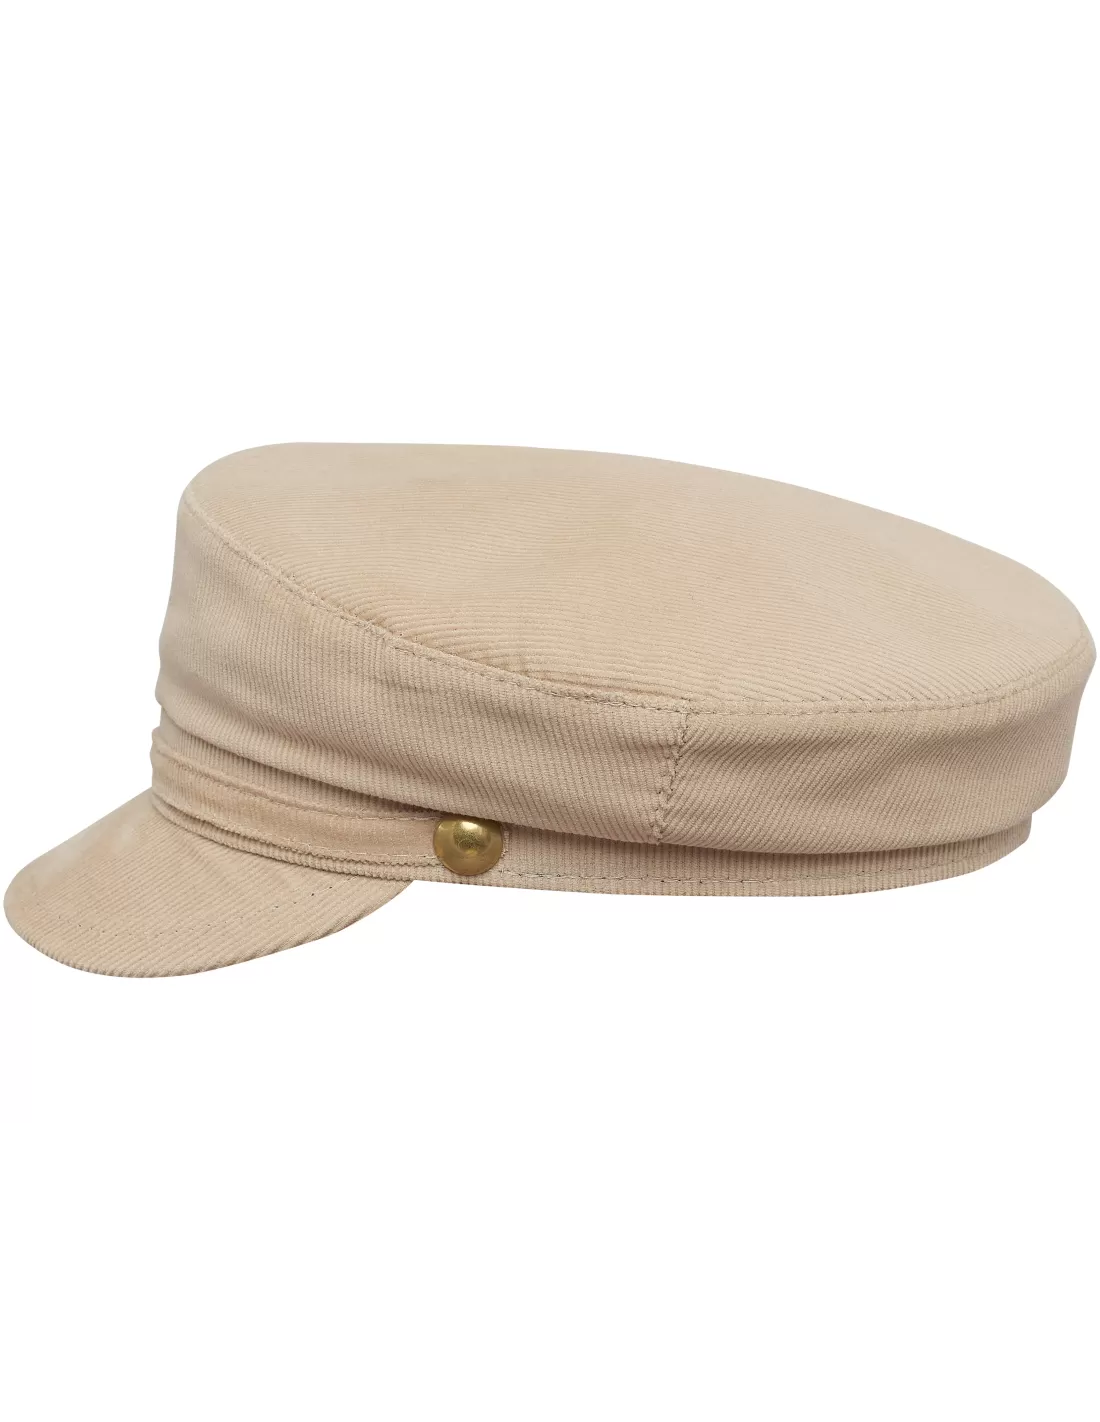 Pireus - breton Liverpool style cap made of cotton corduroy Size 57 cm ...